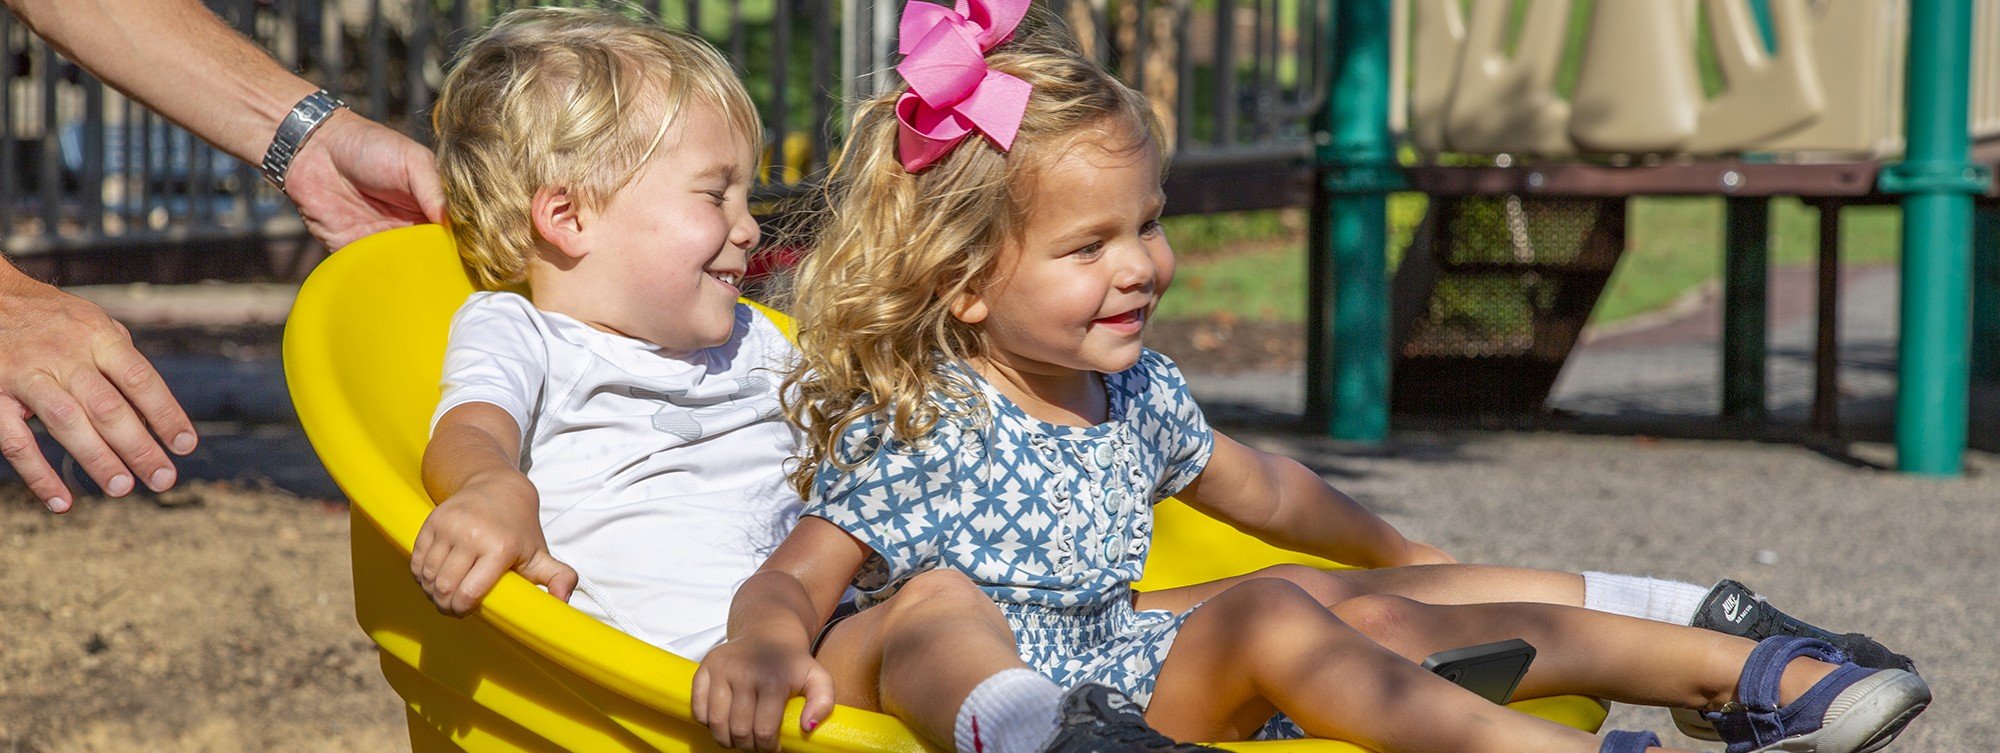 2 children smiling going down yellow slide